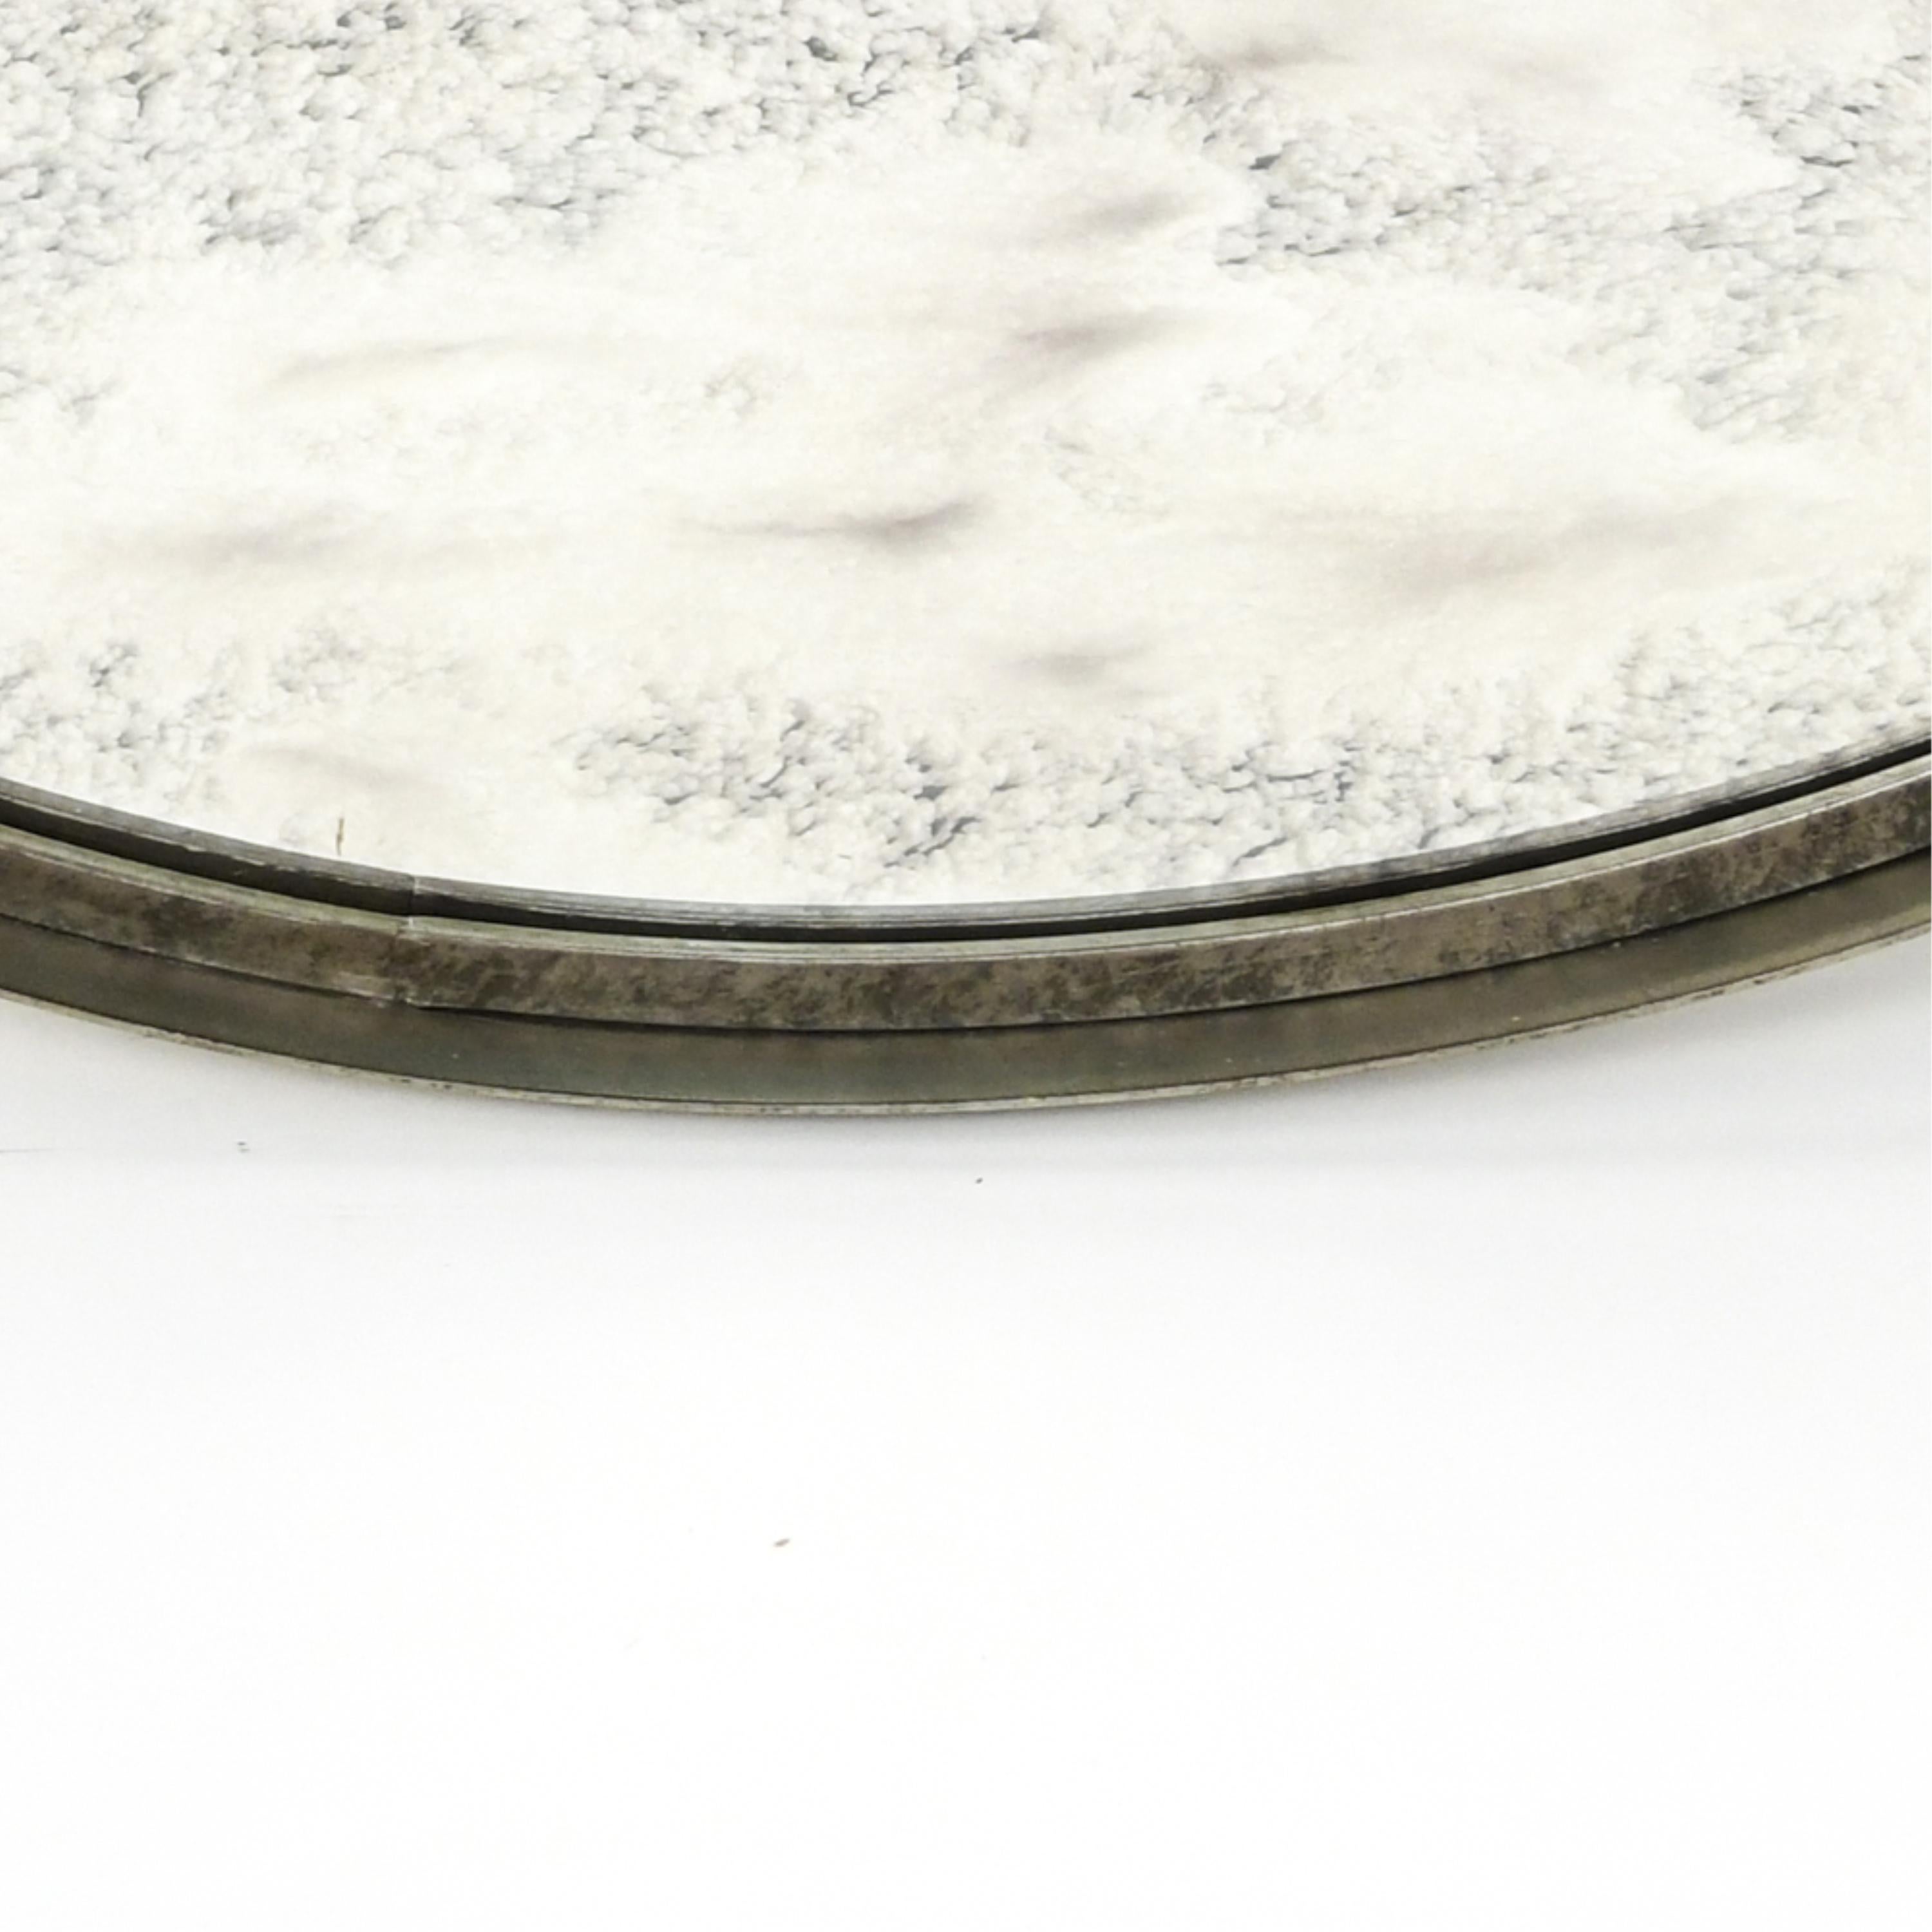 A Lorin Marsh Mid-Century Modern Minimalist enameled steel distressed round mirror
Dimensions: 40